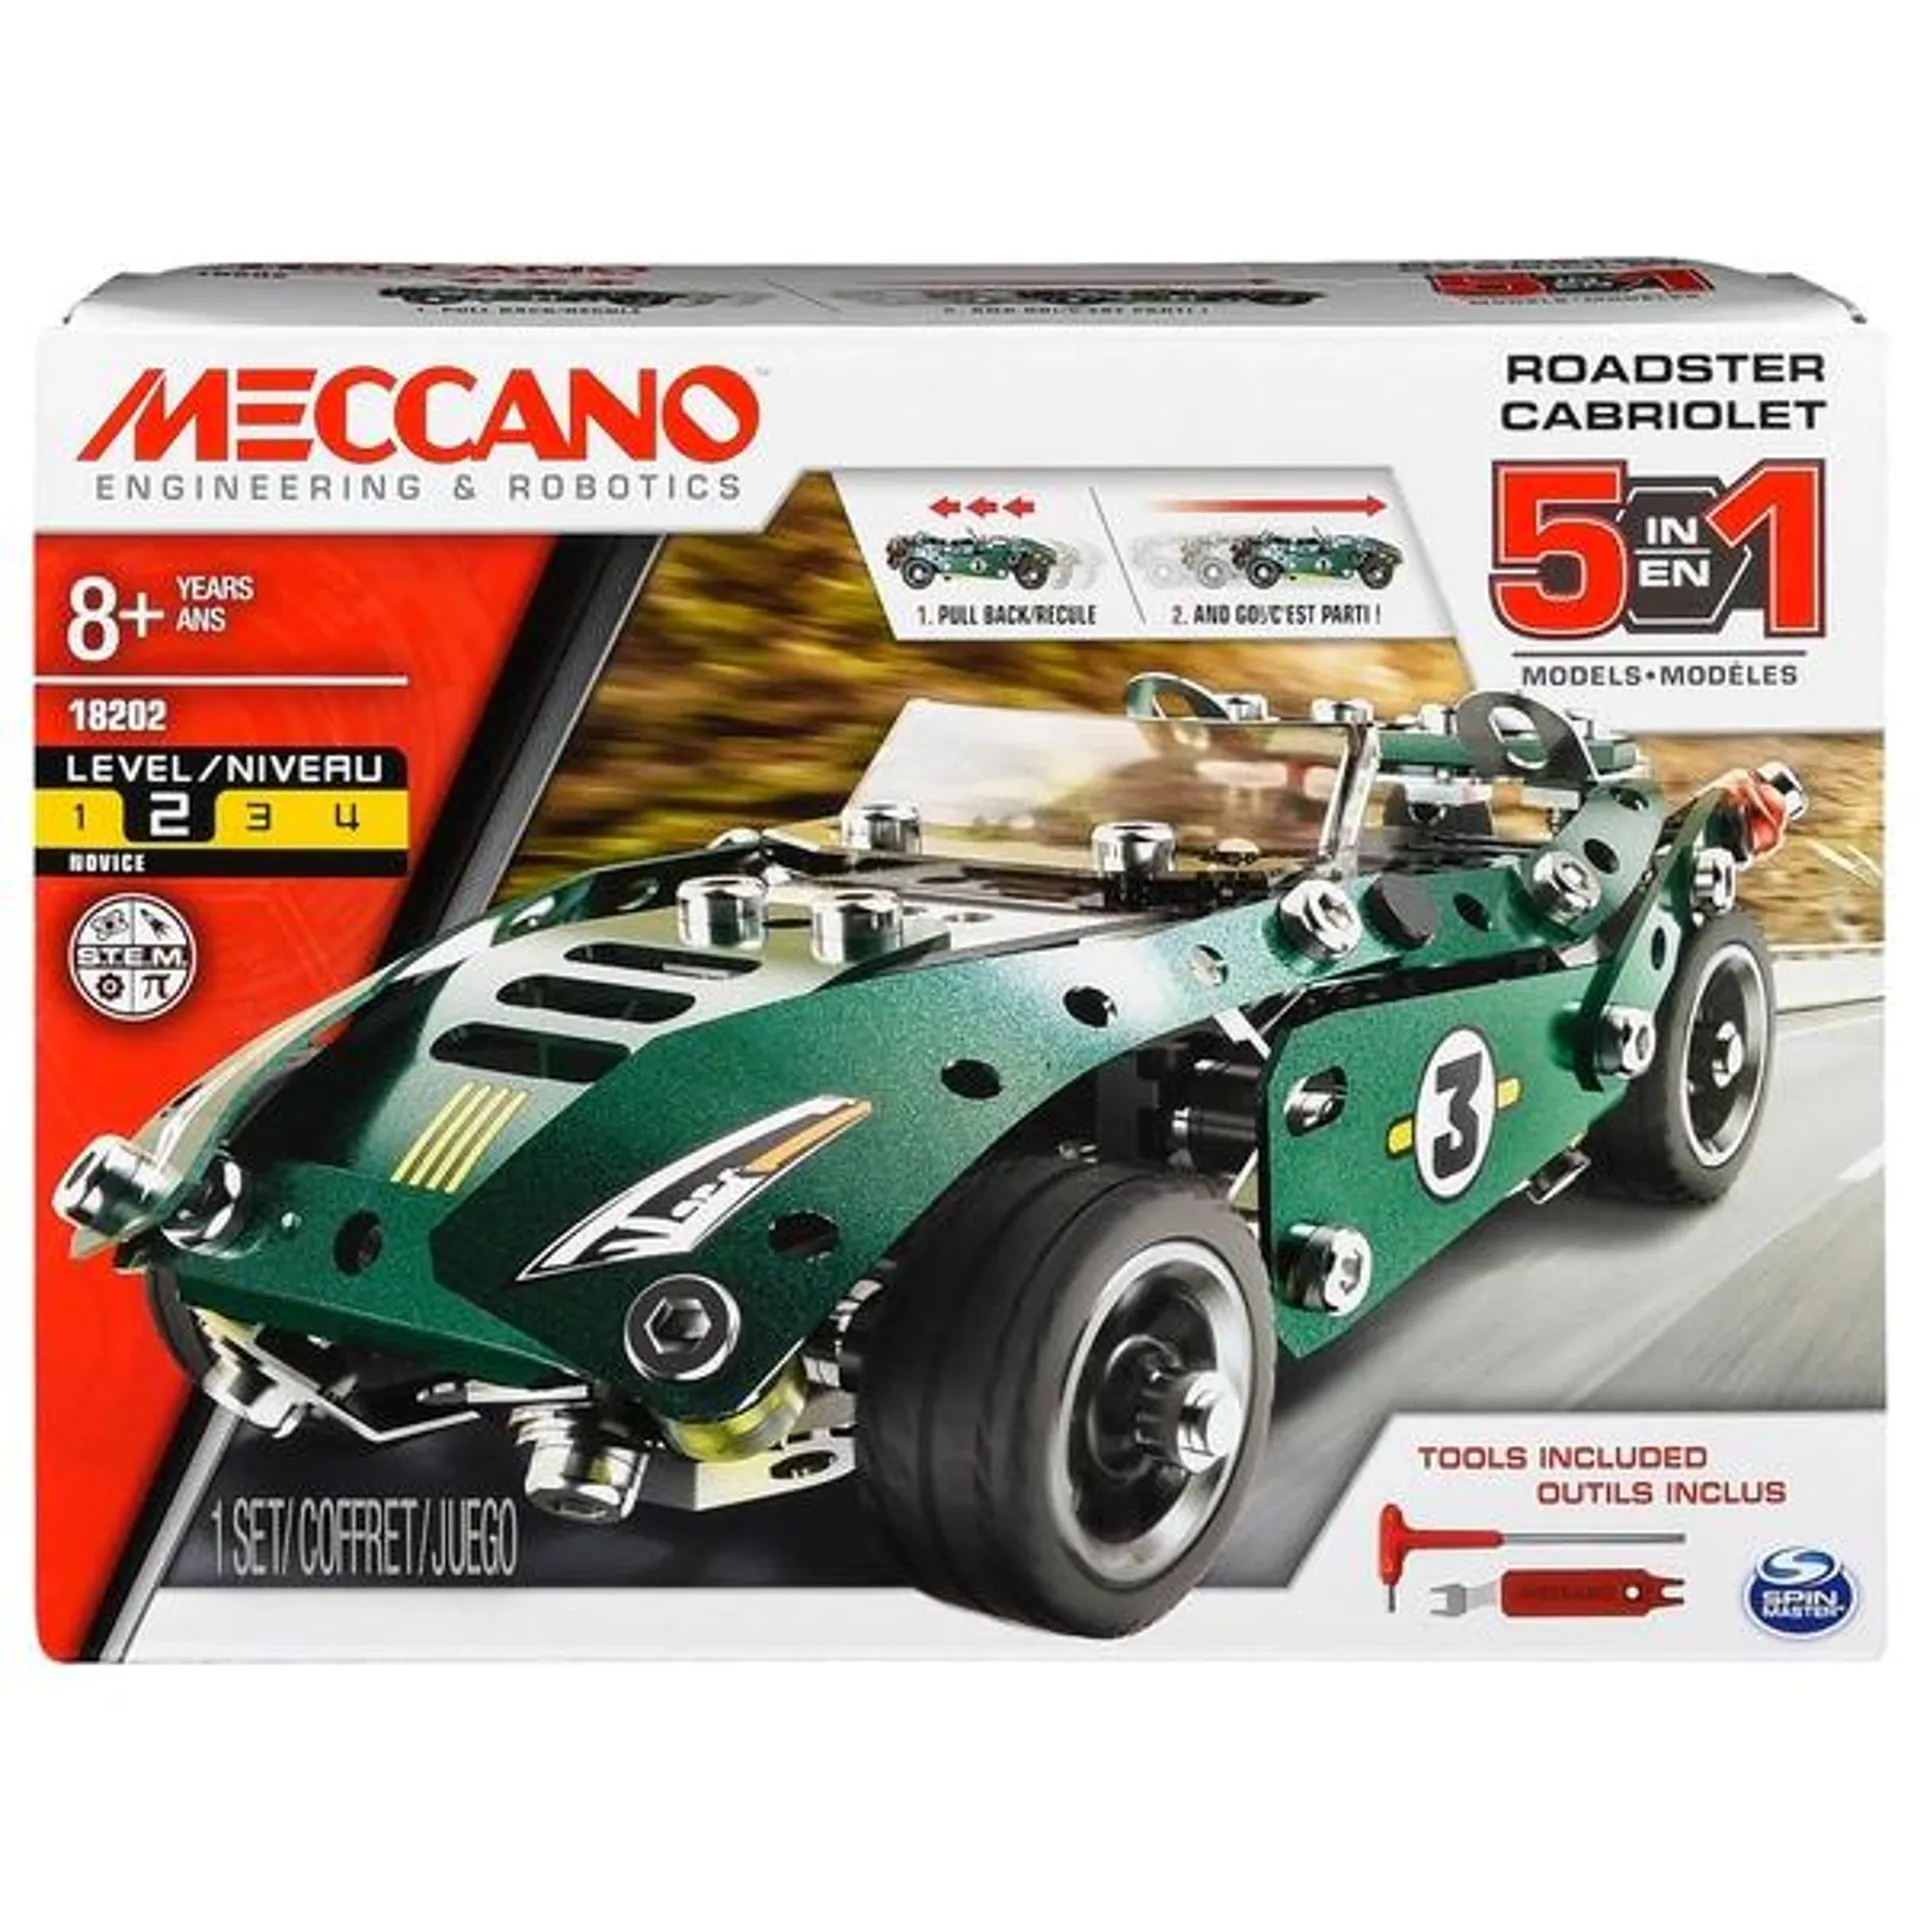 Meccano 5 in 1 Roadster Cabriolet Model Set